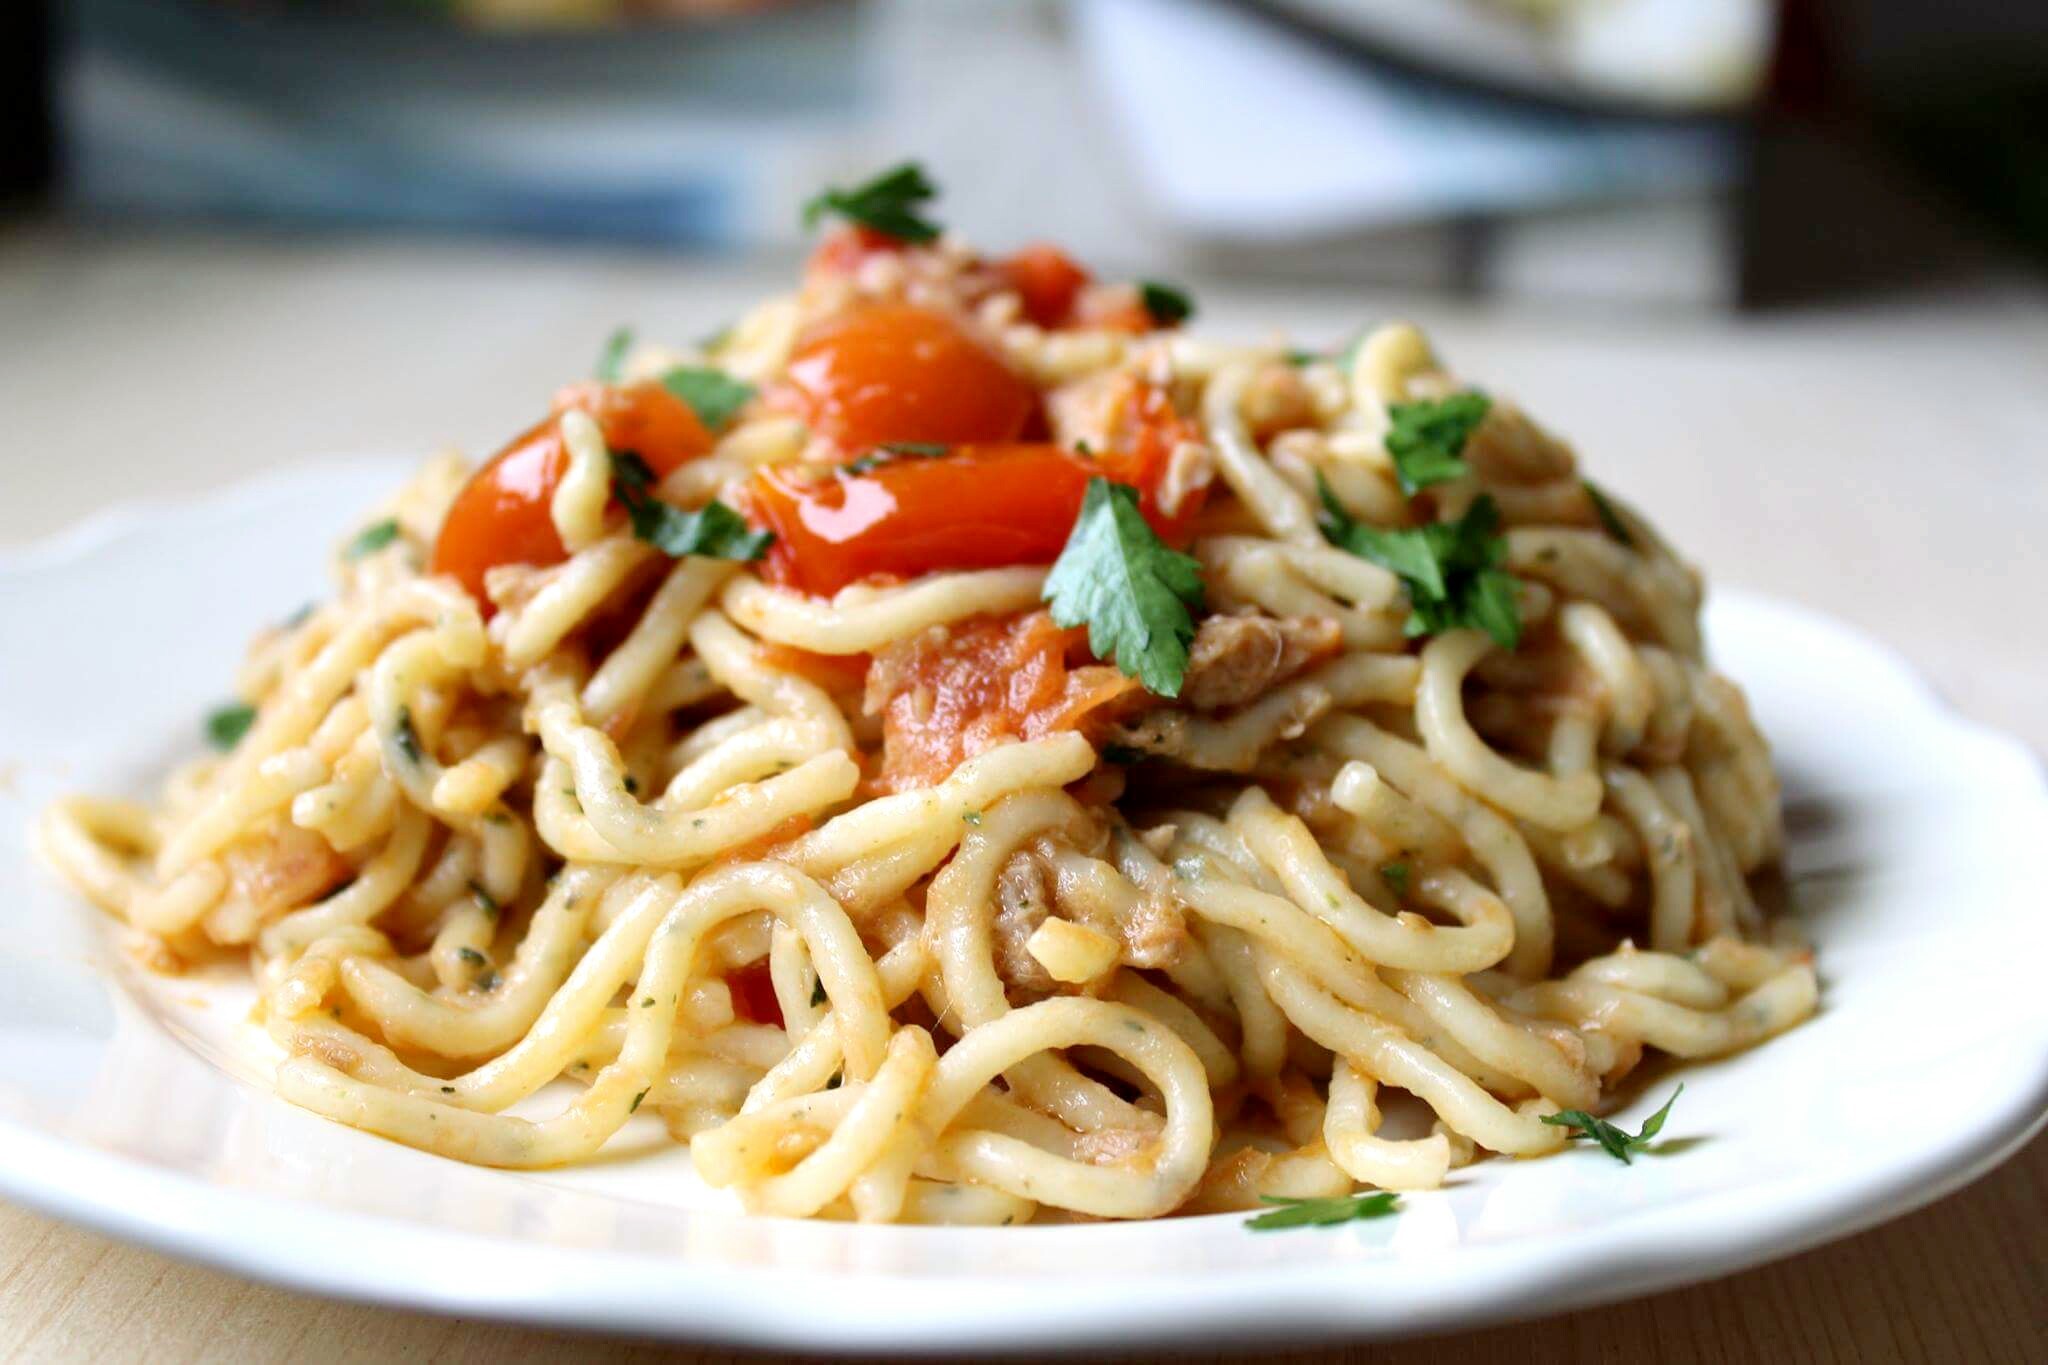 Bikin Spaghetti Al Tonno Sendiri Di Rumah Yuk Moms!